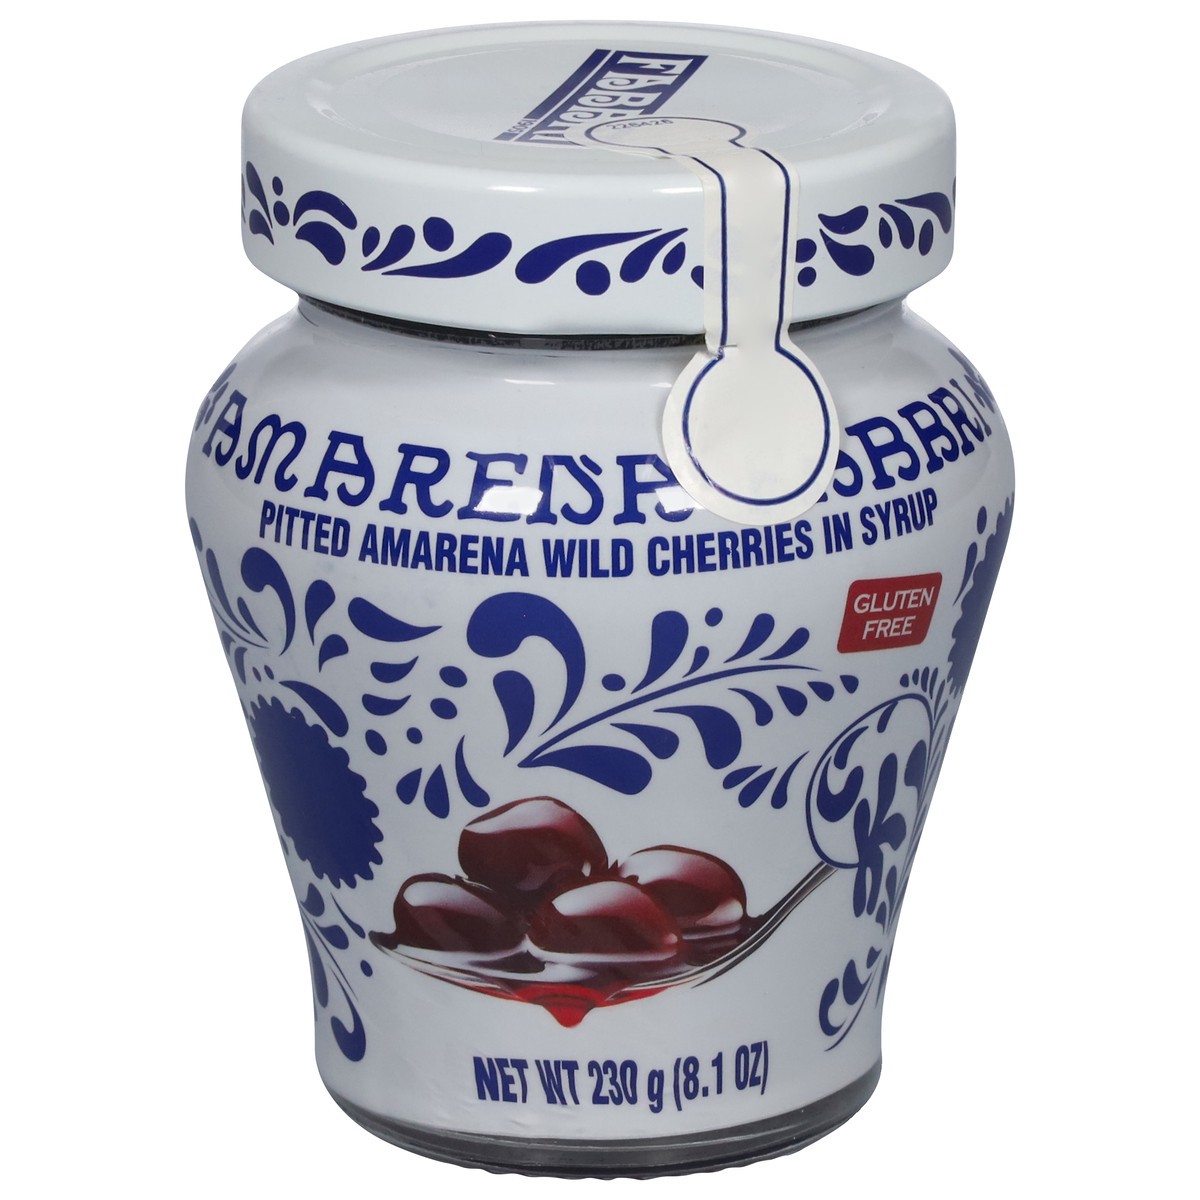 slide 1 of 14, Fabbri 1905 Pitted Amarena Wild Cherries in Syrup 8.1 oz, 8 oz